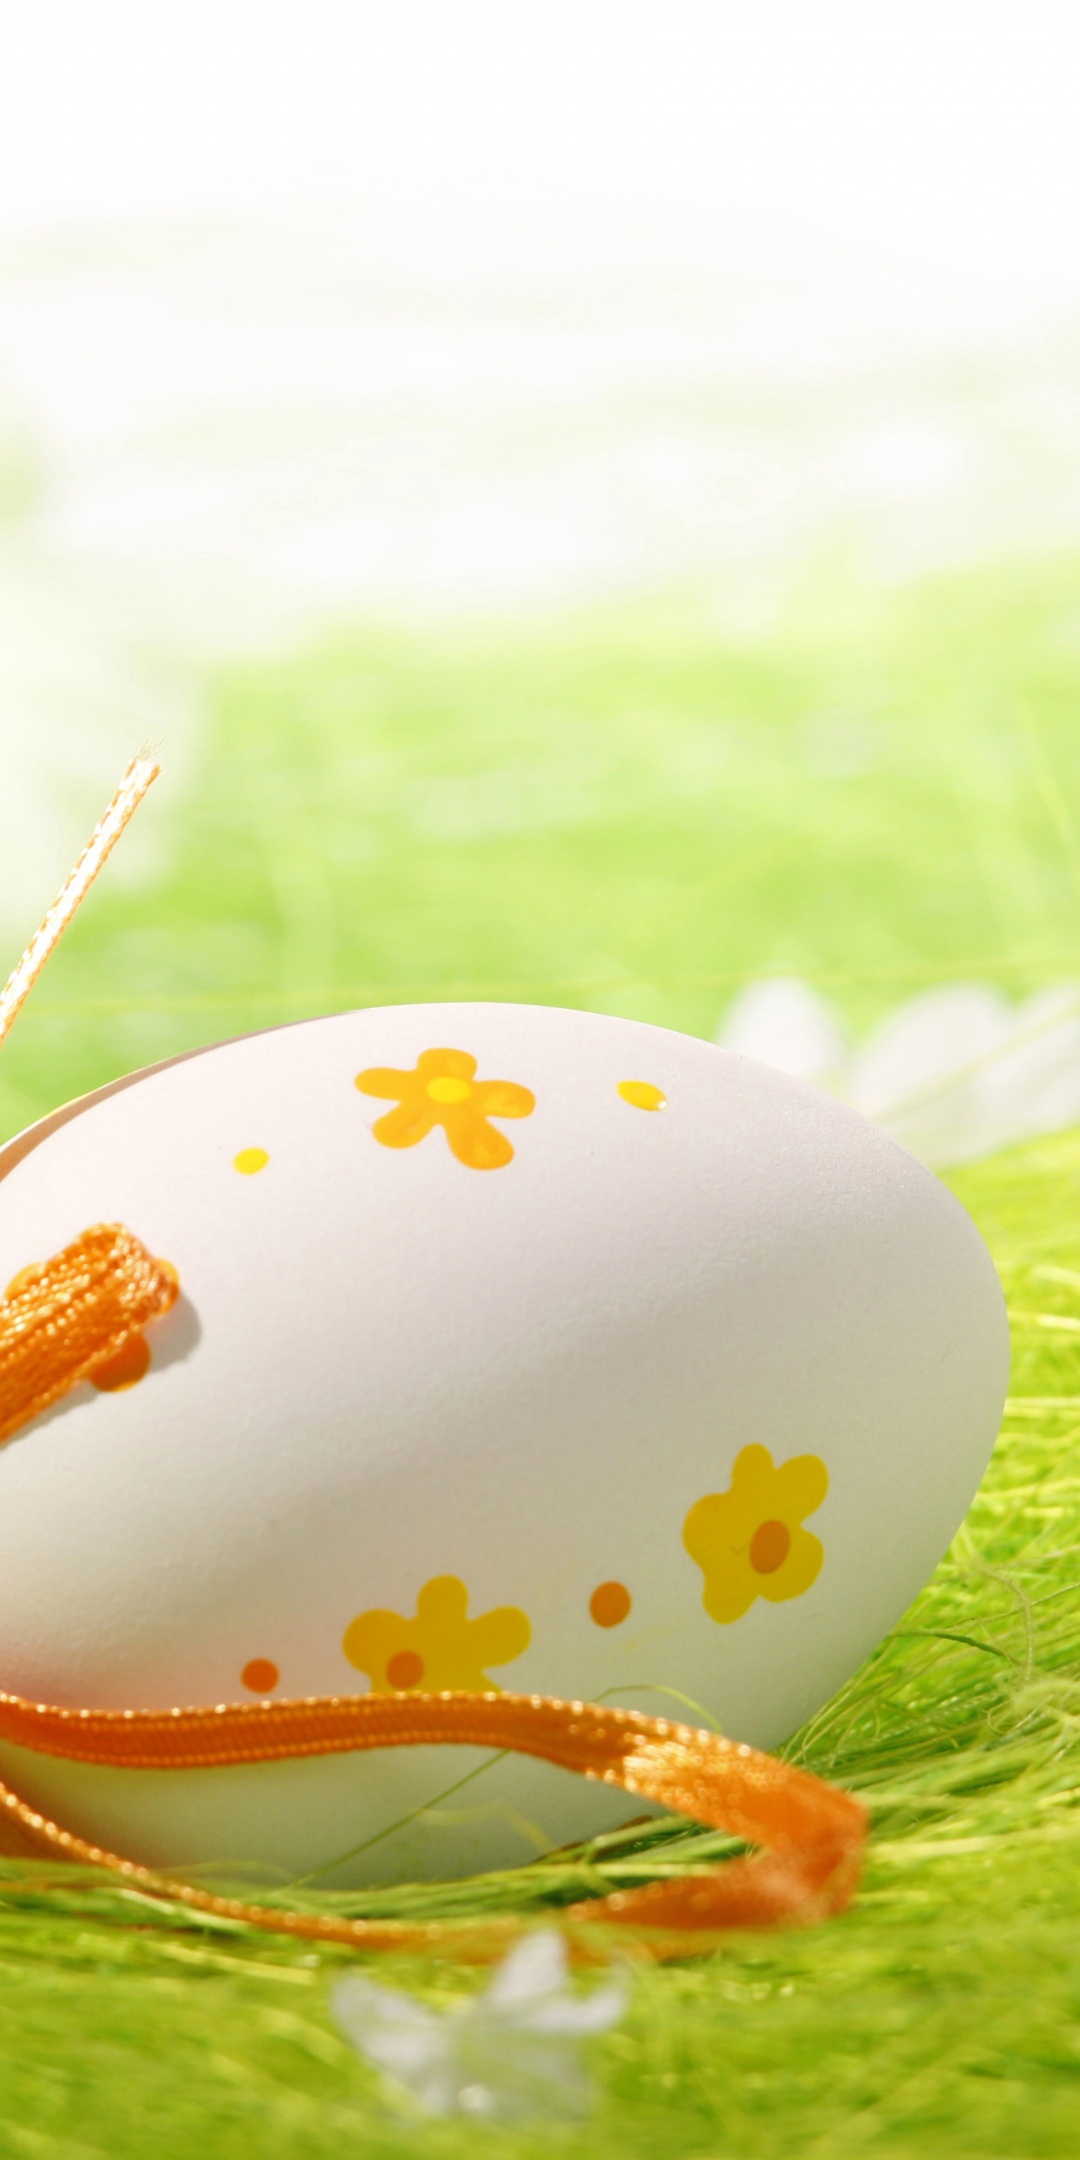 Easter Eggs Closeup